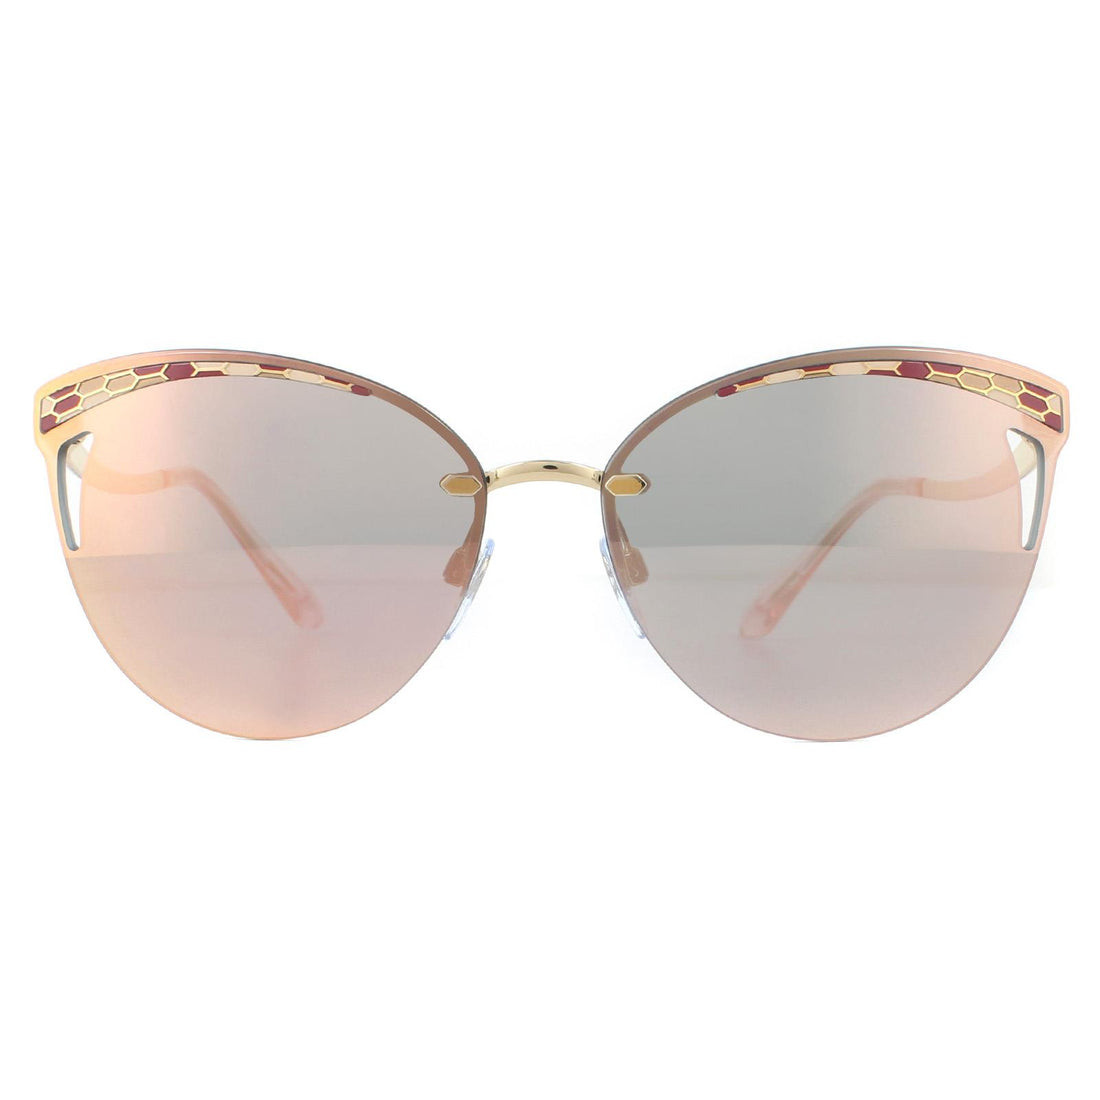 Bvlgari BV6110 Sunglasses Pink Gold / Rose Gold Mirror